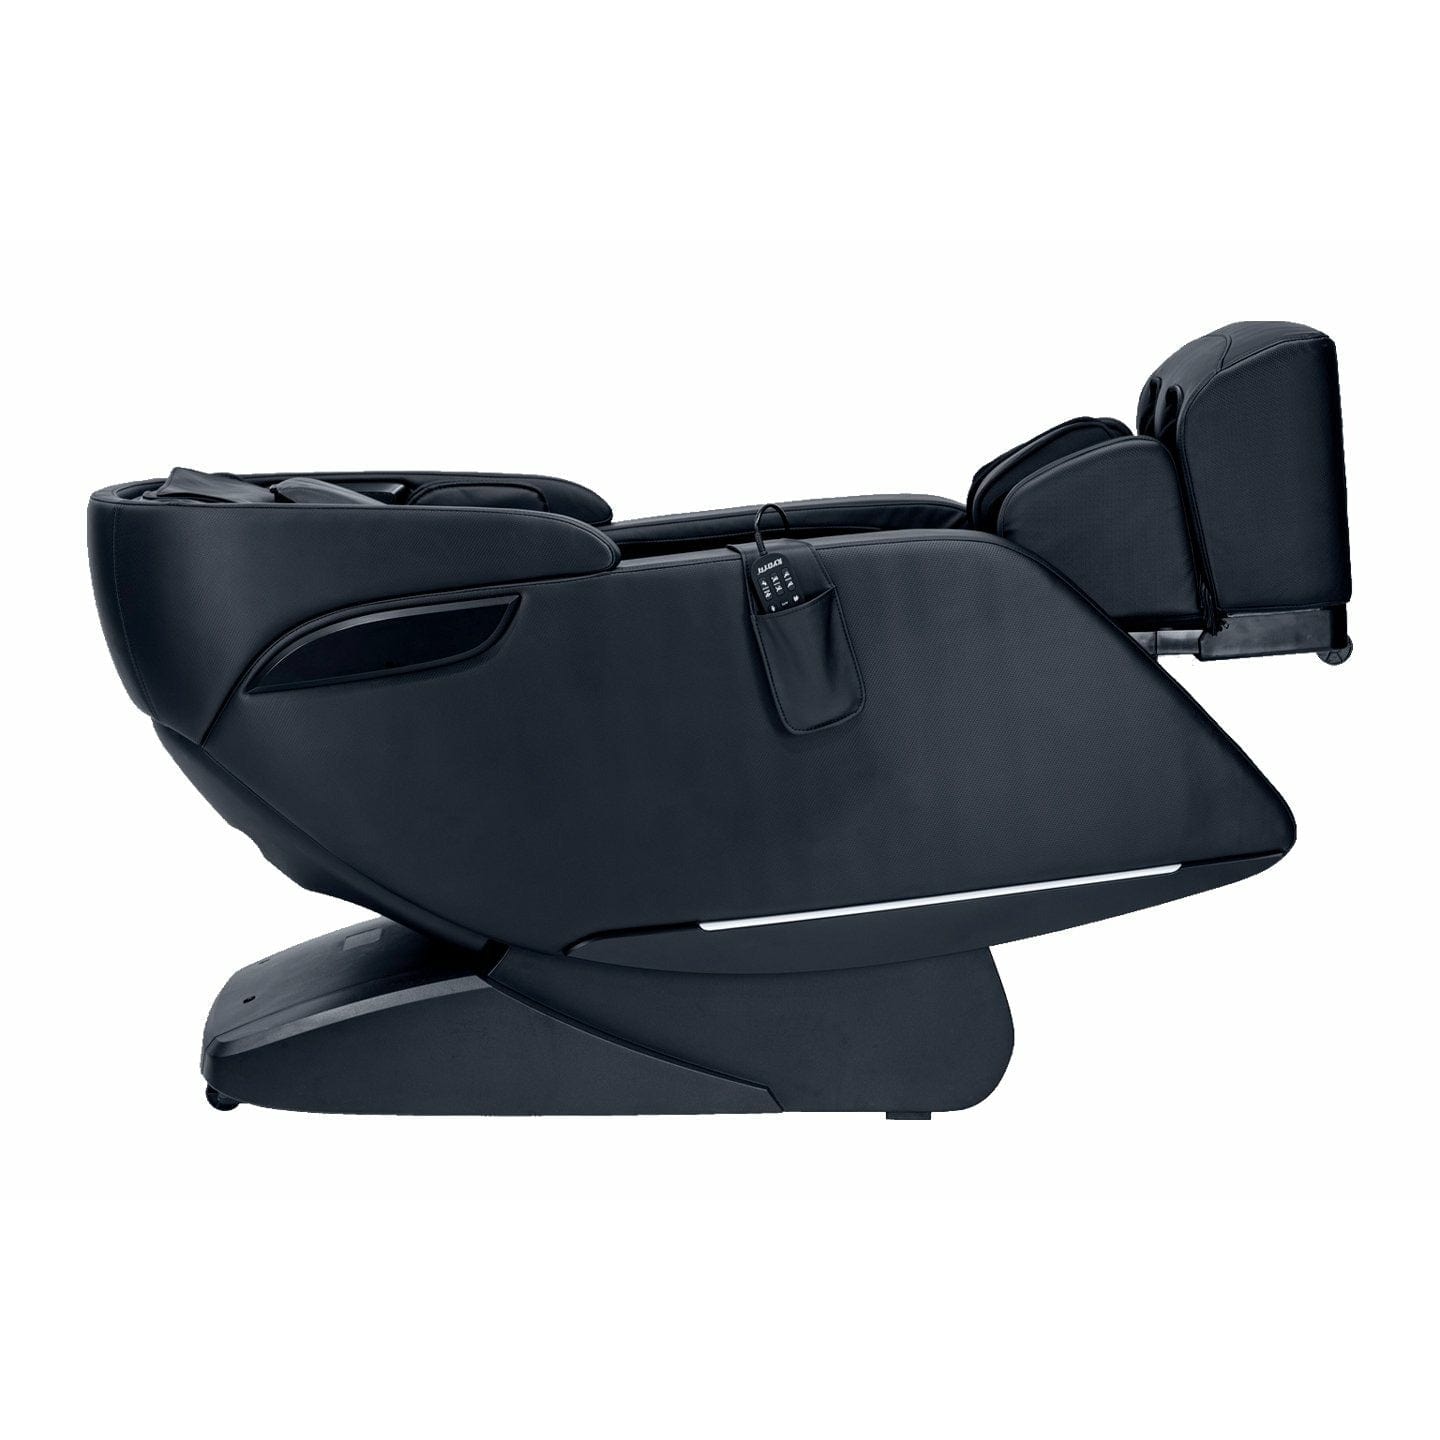 Kyota Massage Chairs Kyota Genki M380 Massage Chair